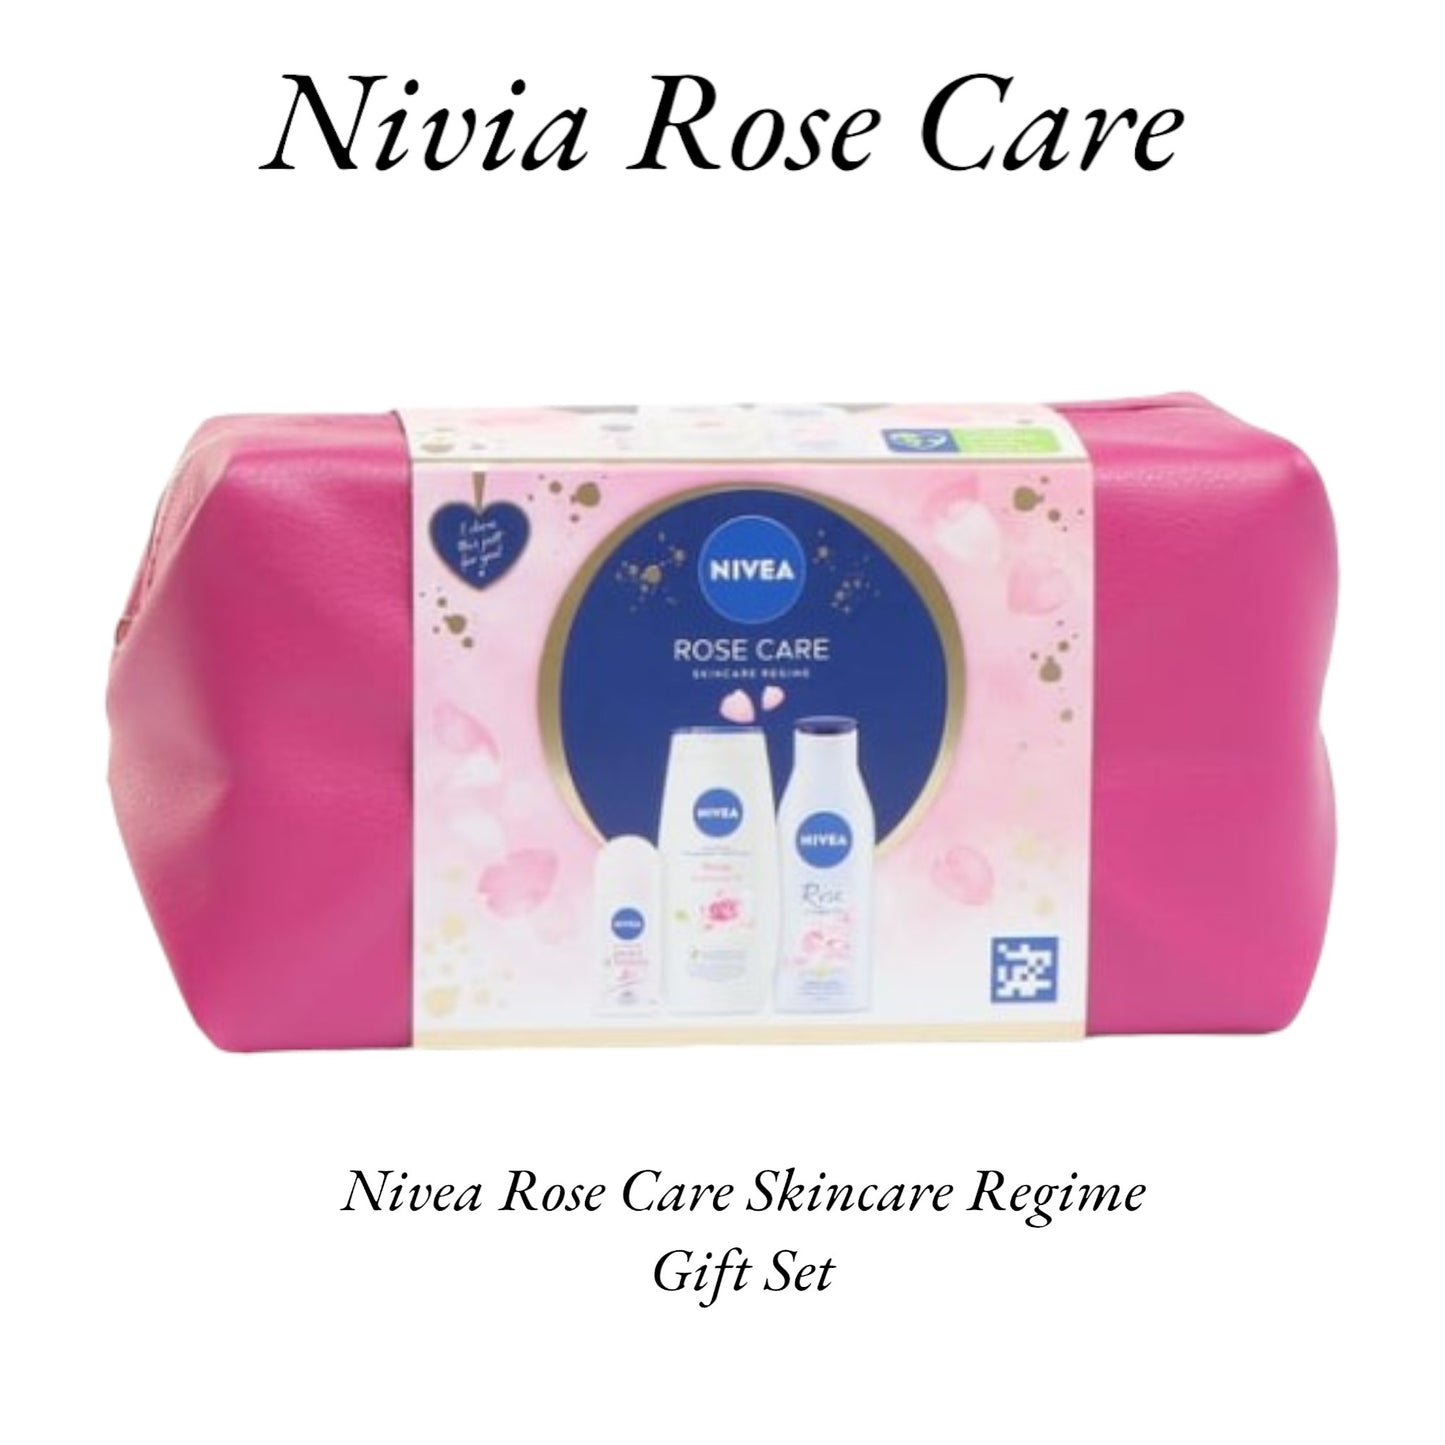 Nivea Rose Care Skincare Regime Gift Set